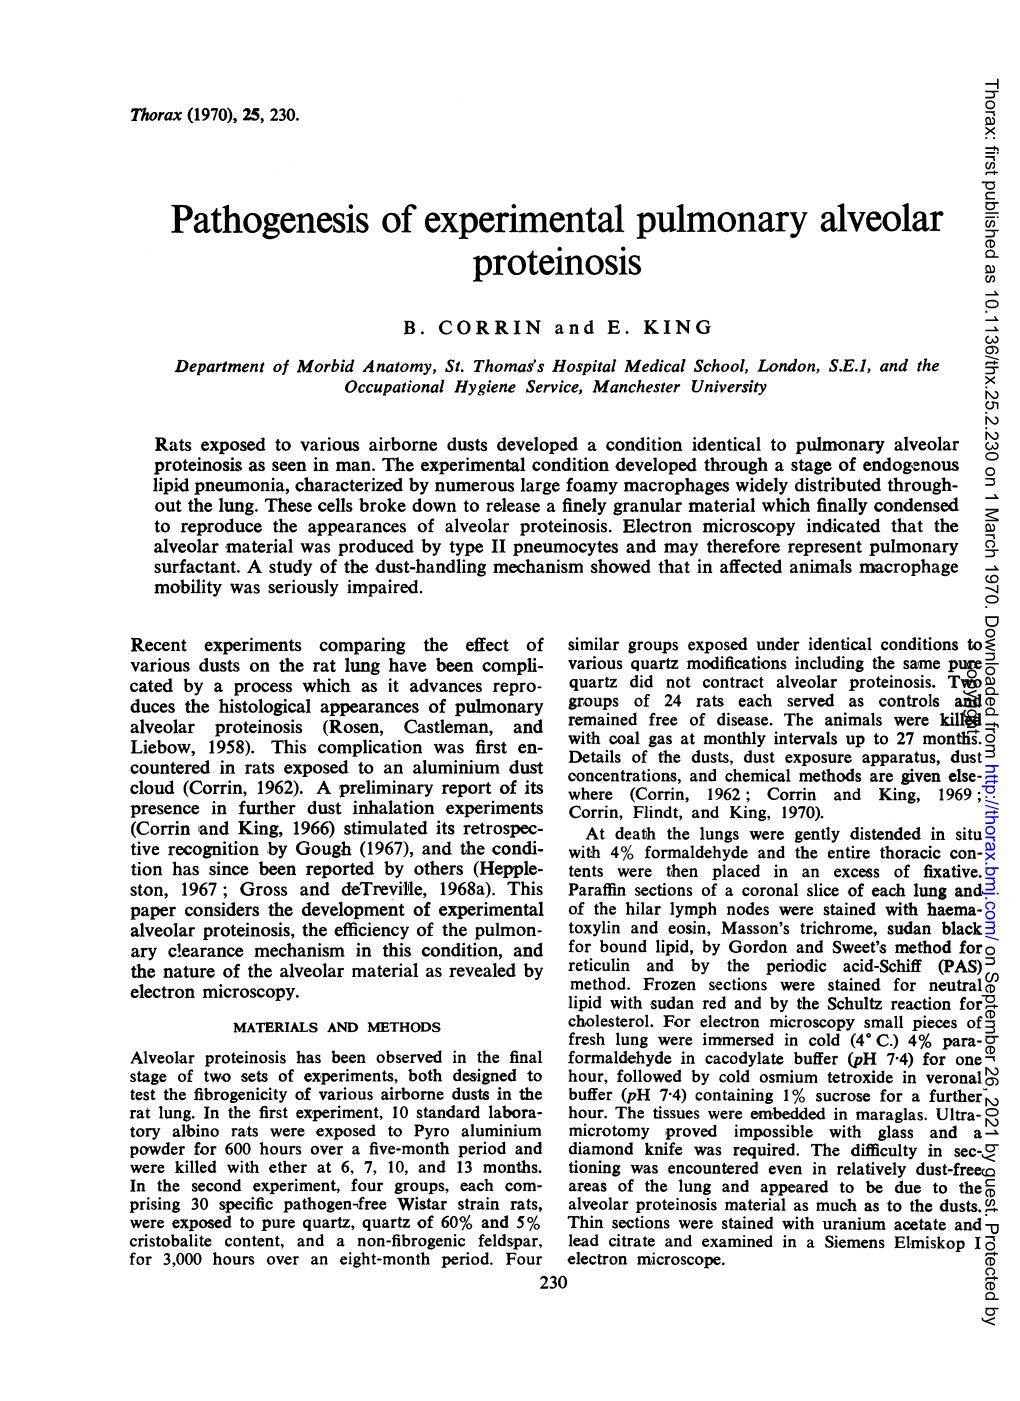 Pathogenesis of Experimental Pulmonary Alveolar Proteinosis